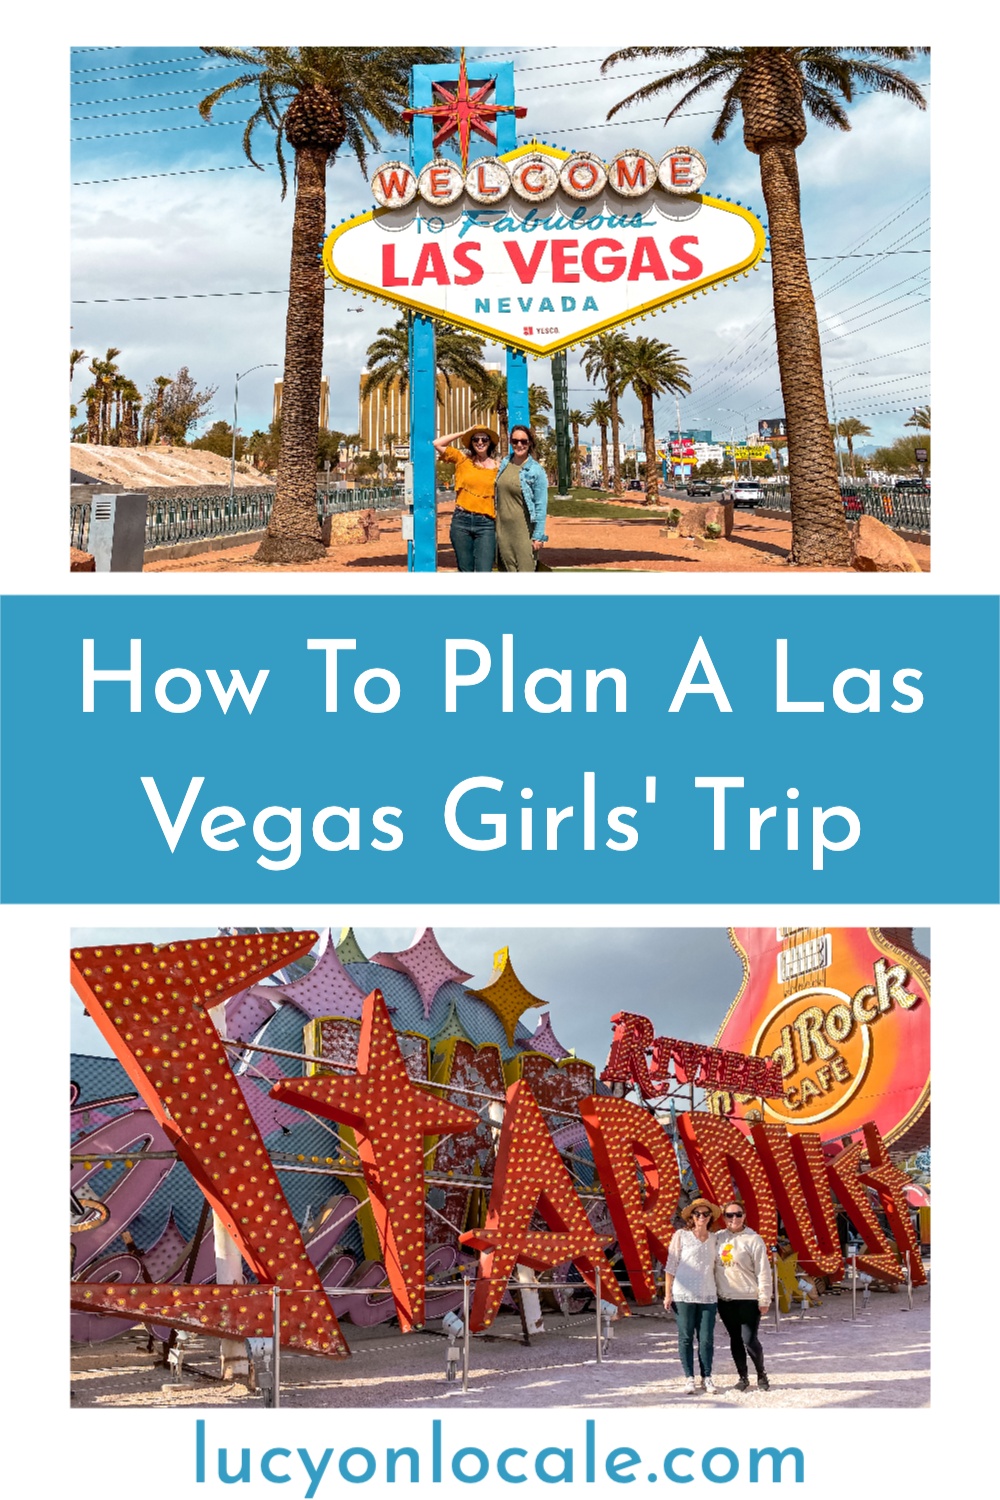 Las Vegas Girl's Trip: Planning a Vegas Girls Weekend